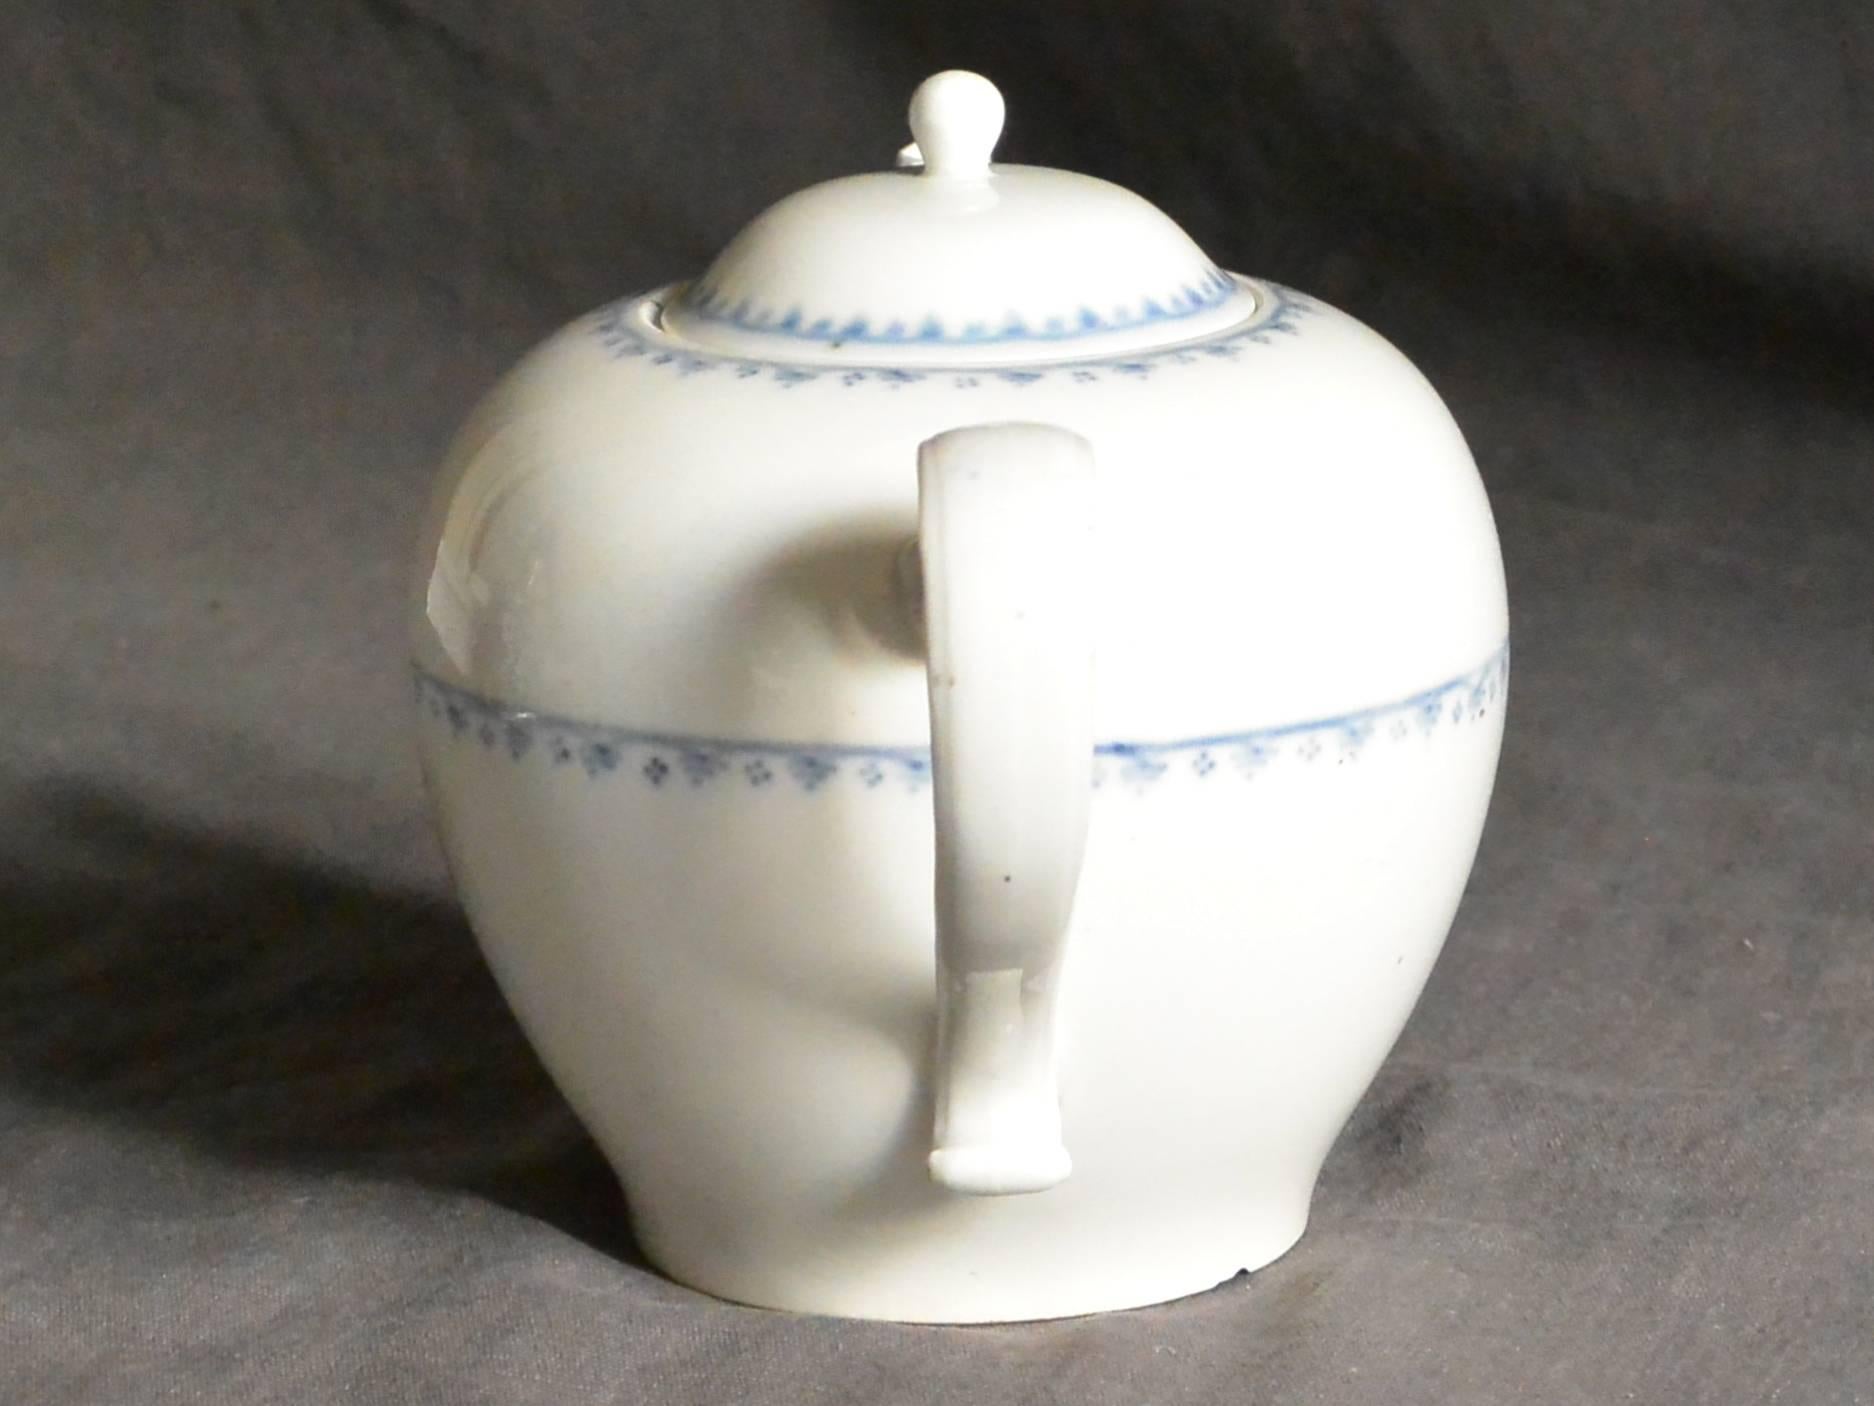 Austrian Blue and White Vienna Porcelain Teapot